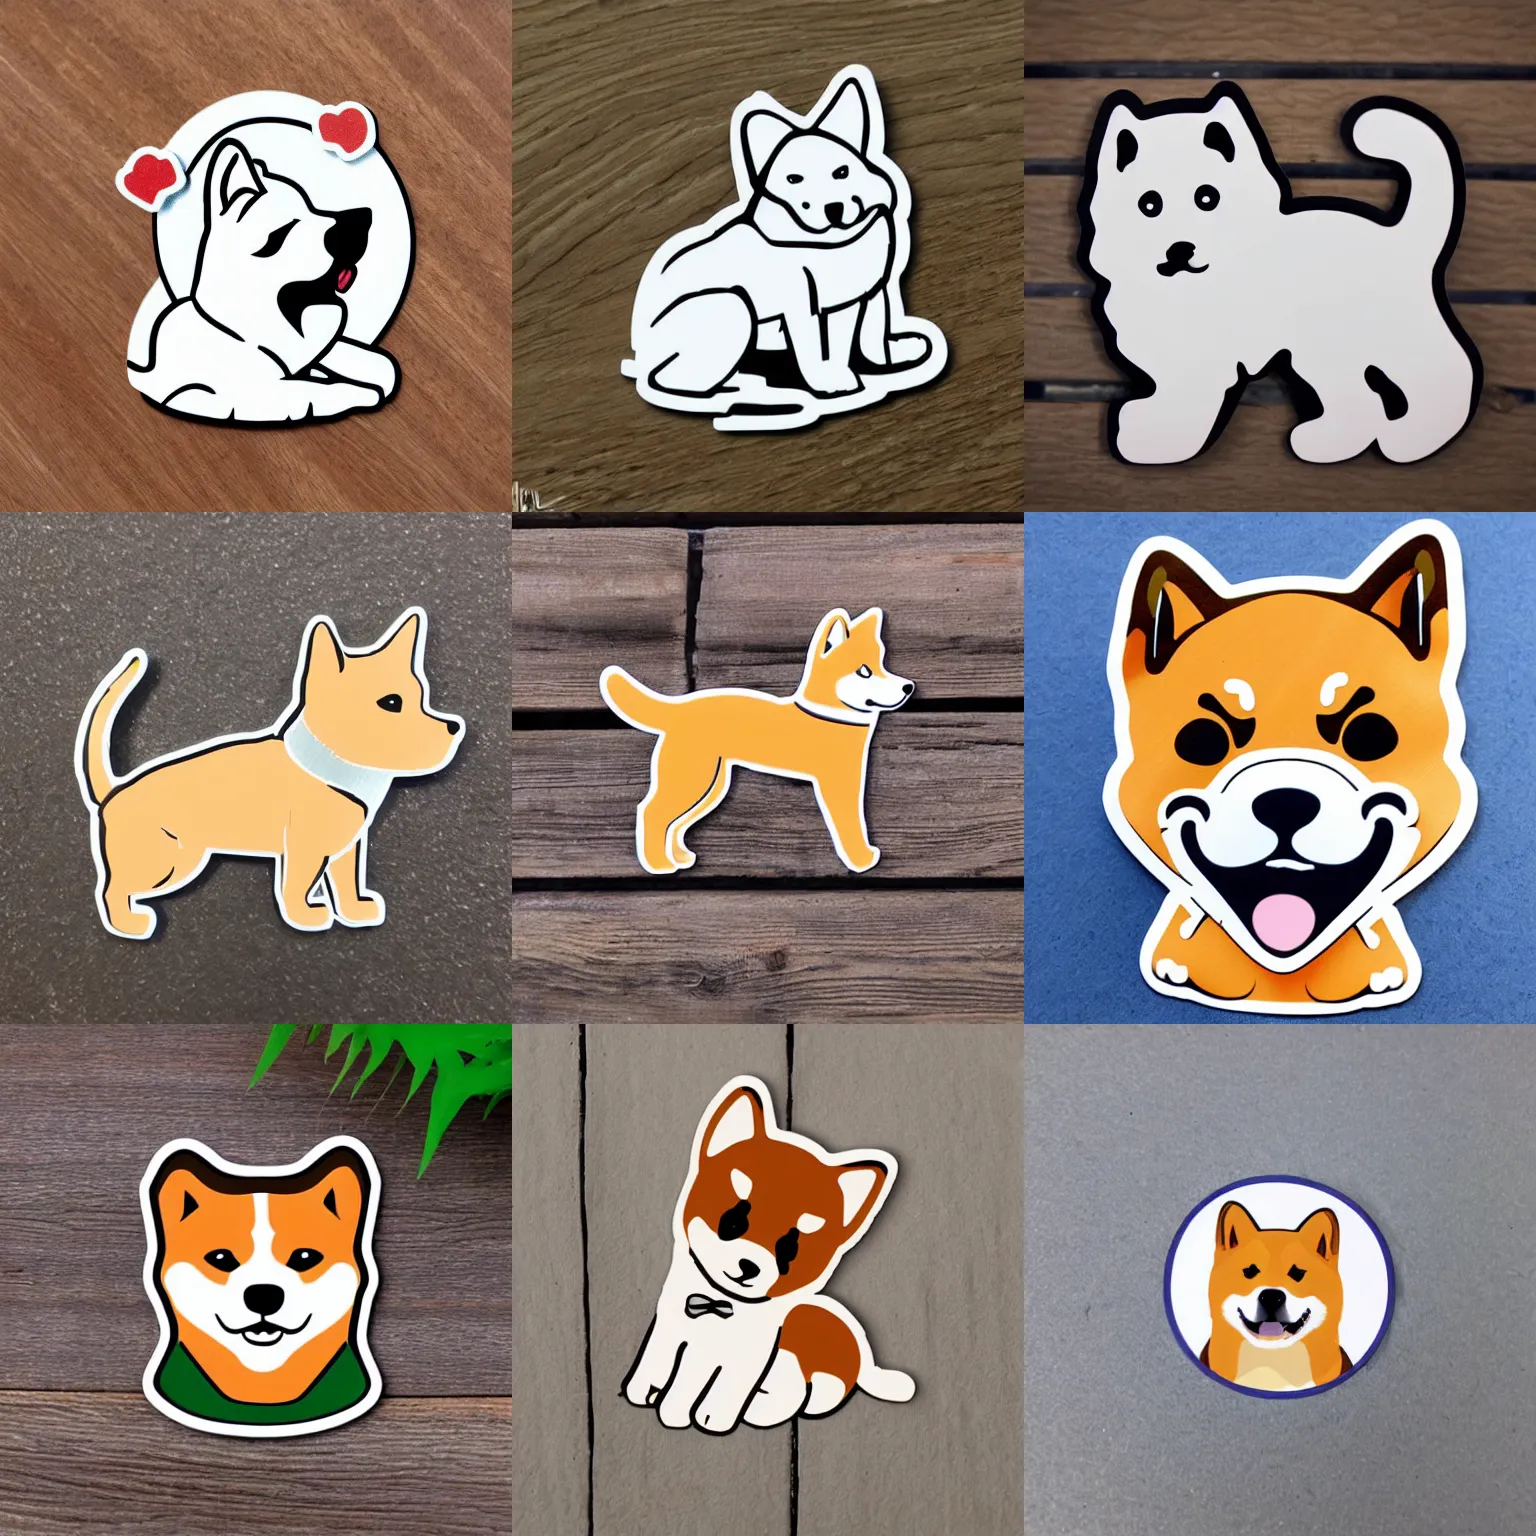 Prompt: cartoon die cut sticker of shiba inu puppy on lilght greay wood